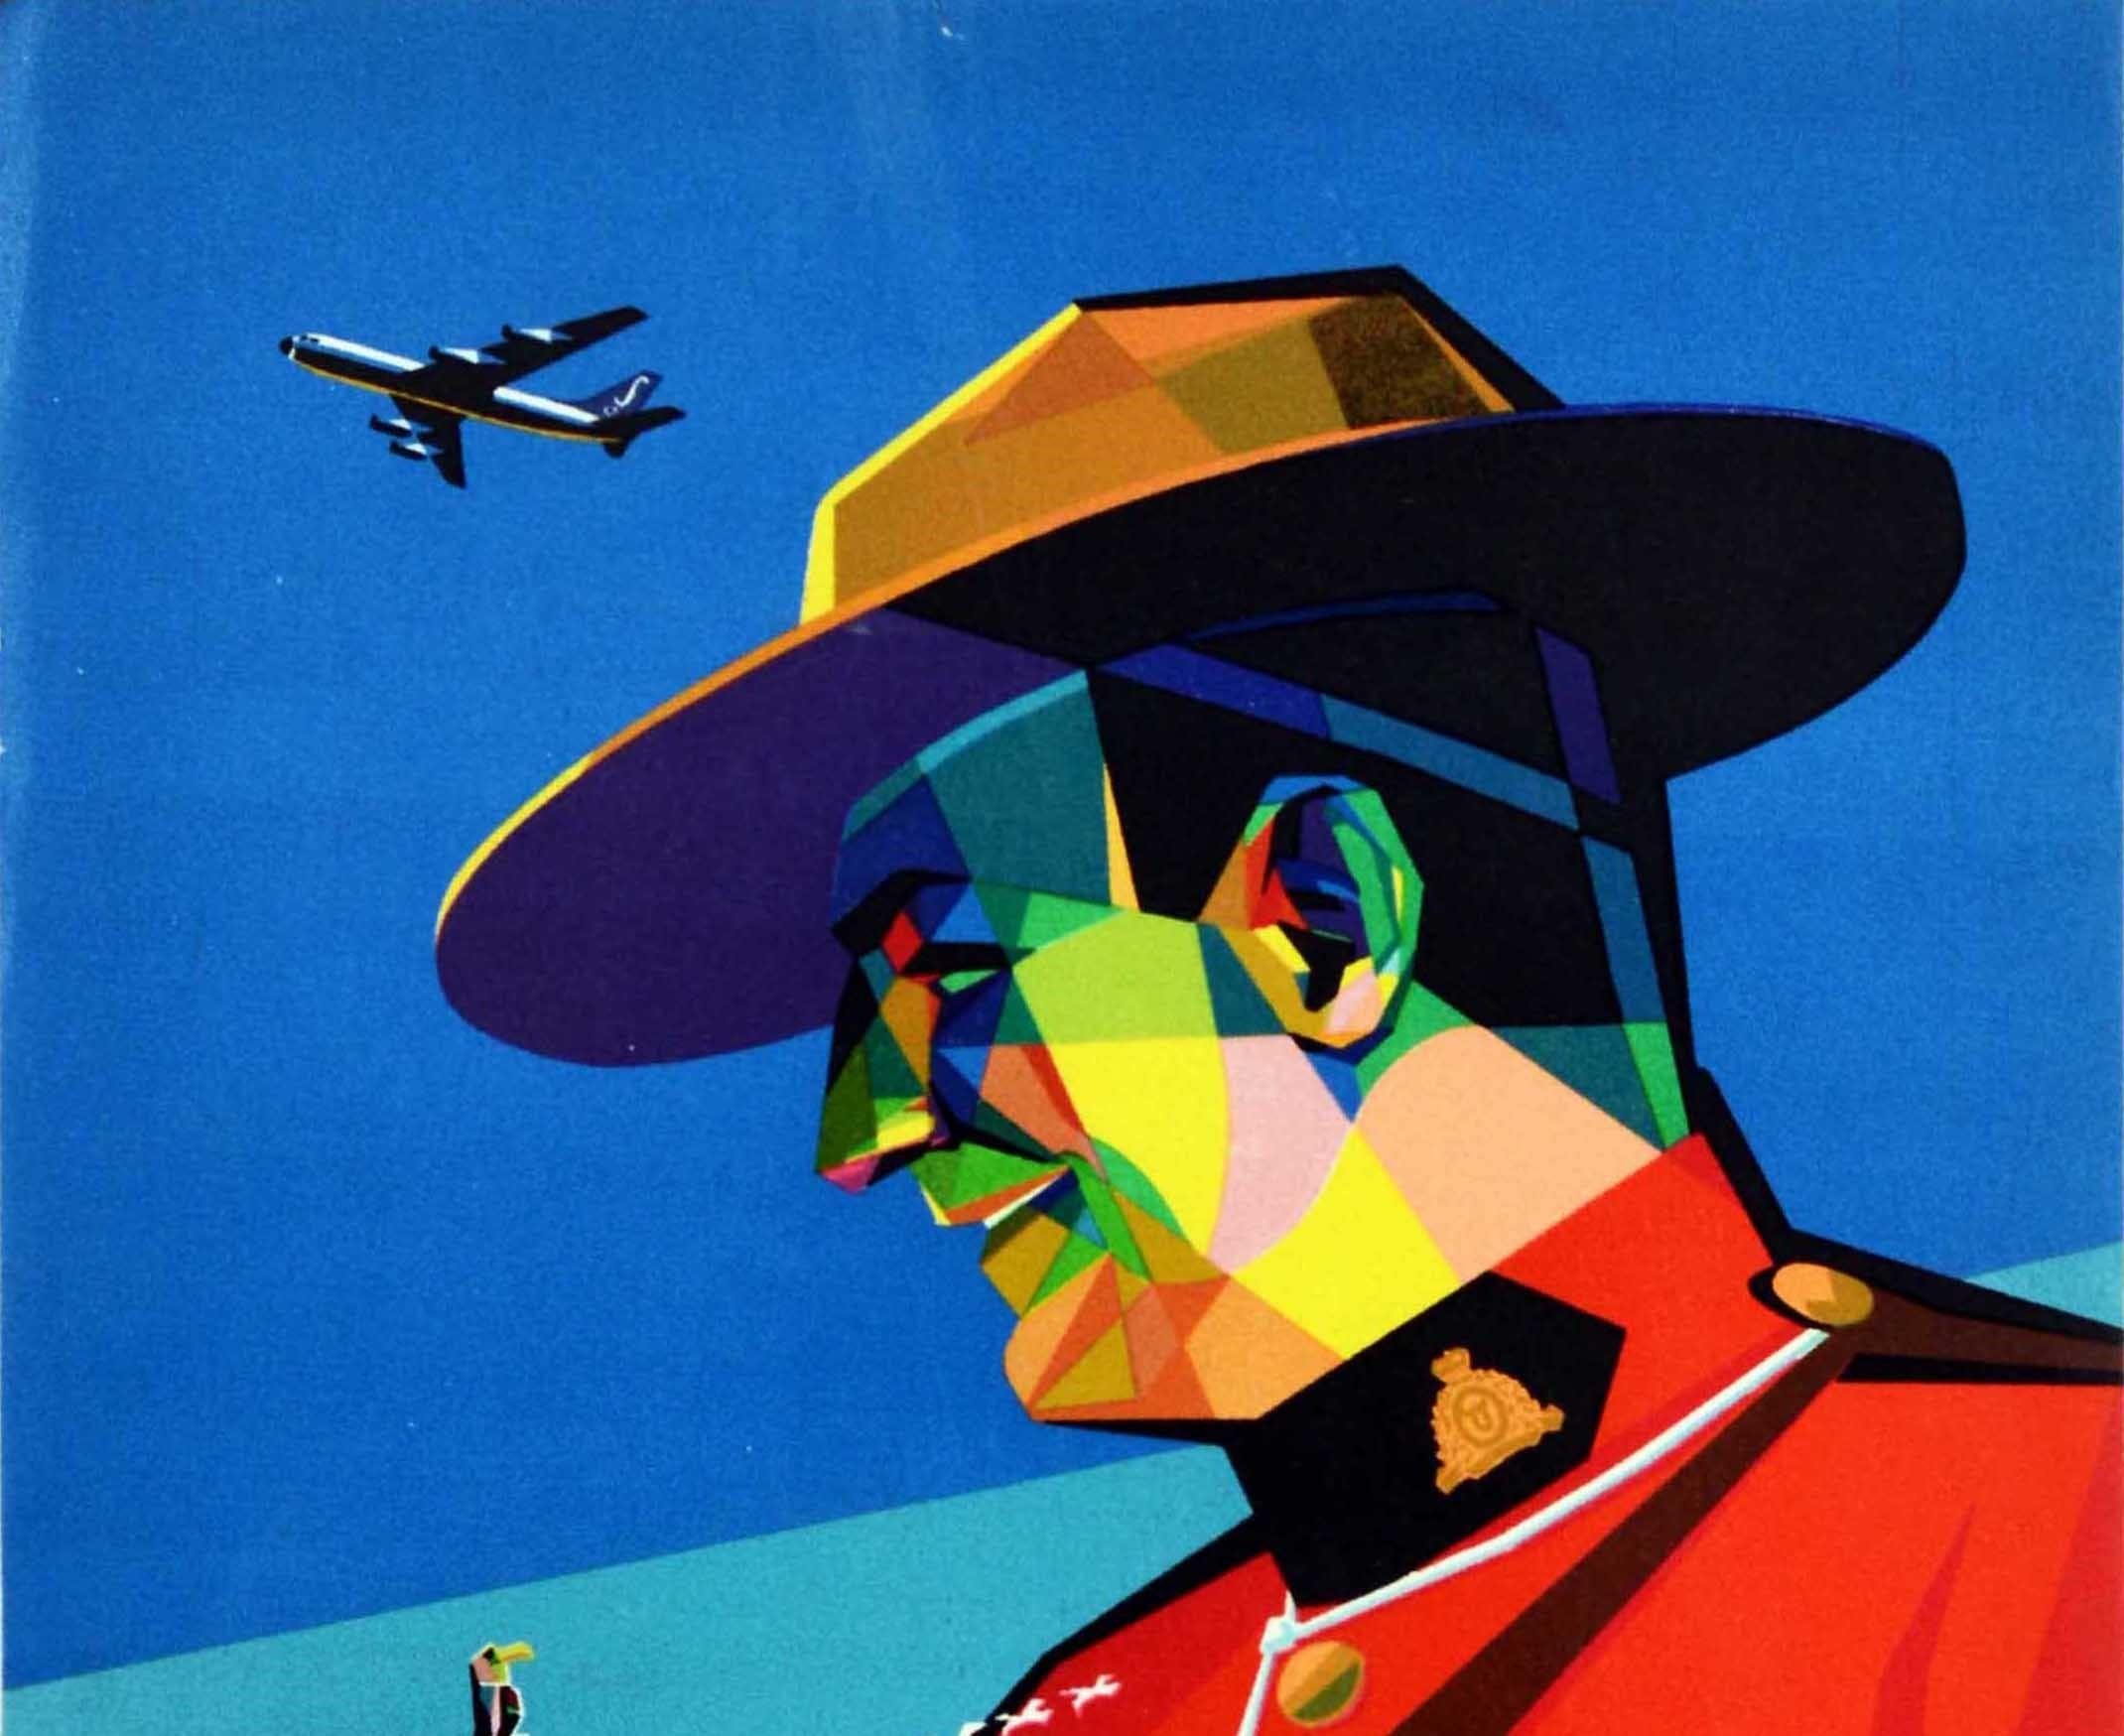 Original Vintage Travel Poster For Canada By Sabena Airlines RCMP Mountie Design - Print by Gaston van den Eynde